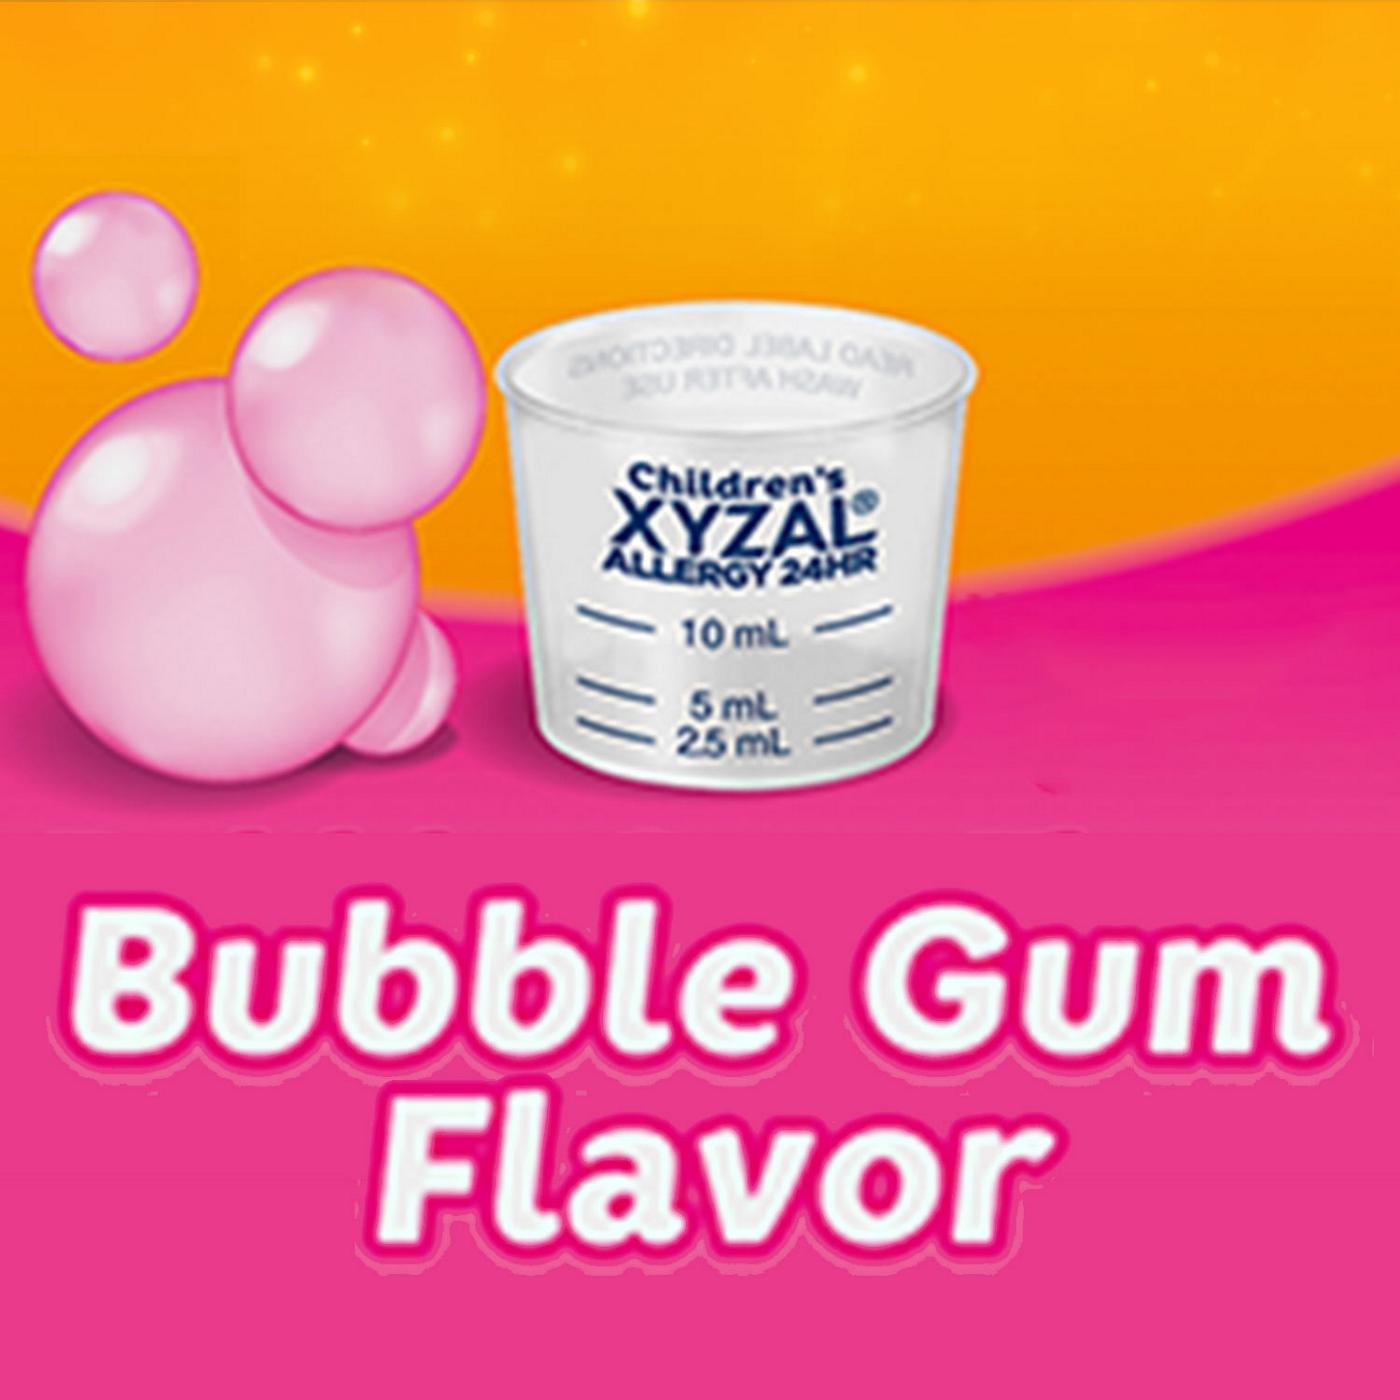 Xyzal Children's Allergy 24 Hour Relief Liquid - Bubble Gum; image 6 of 9